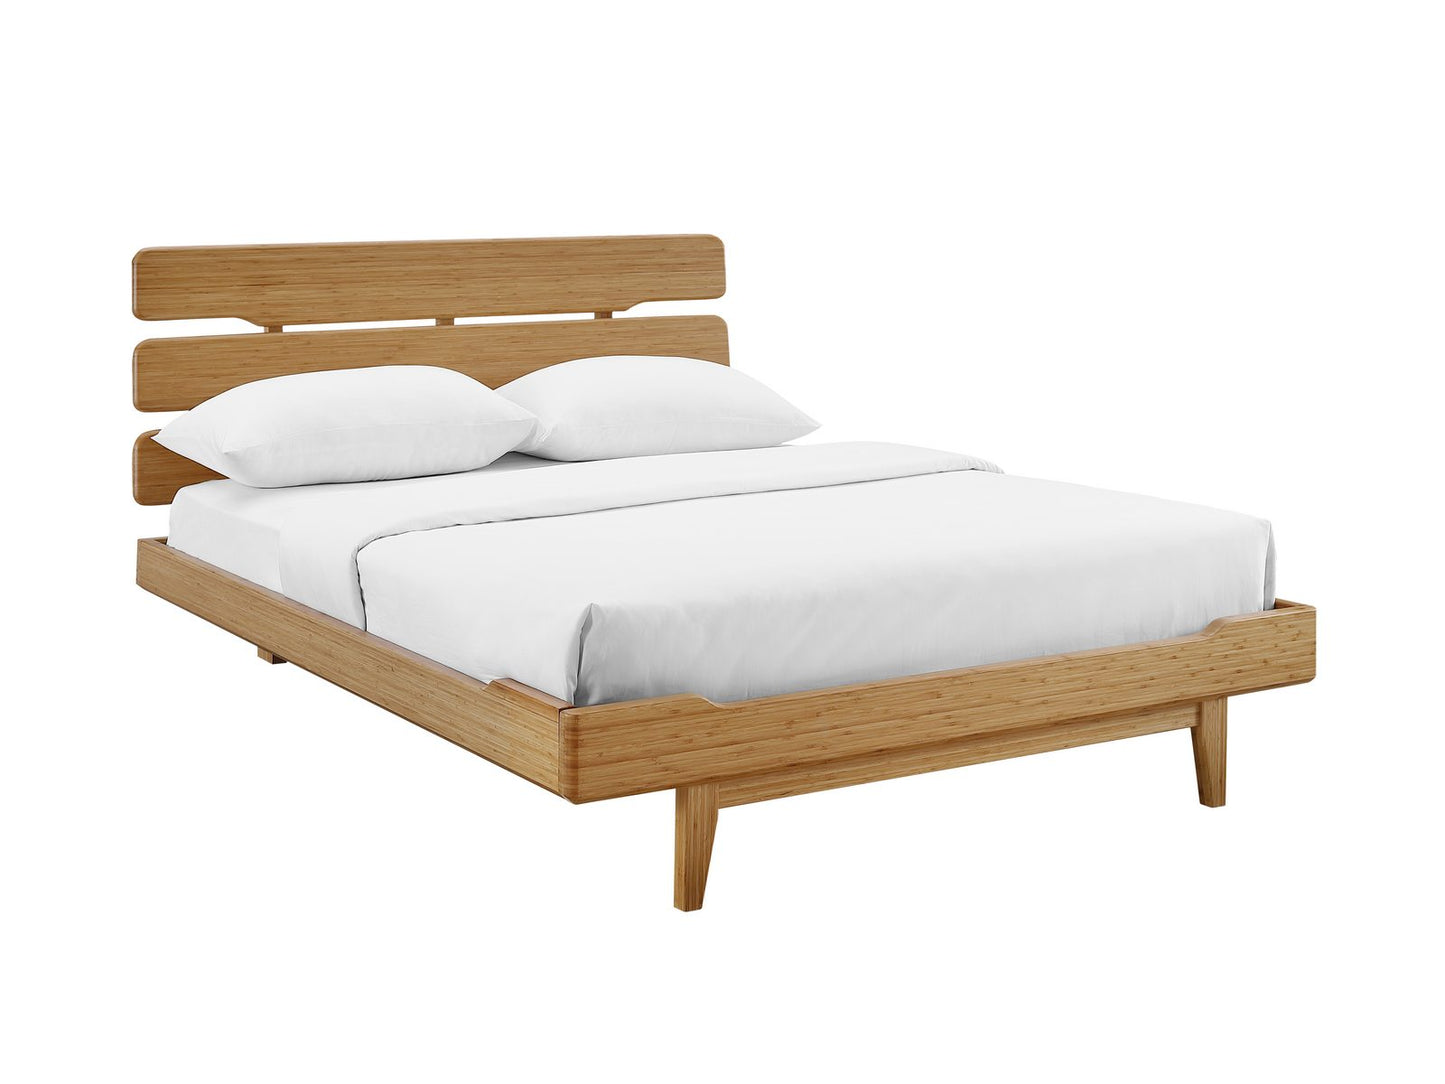 5pc Greenington Currant Modern Eastern King Platform Bedroom Set (Includes: 1 Eastern King Bed, 2 Nightstands, 2 Dressers)